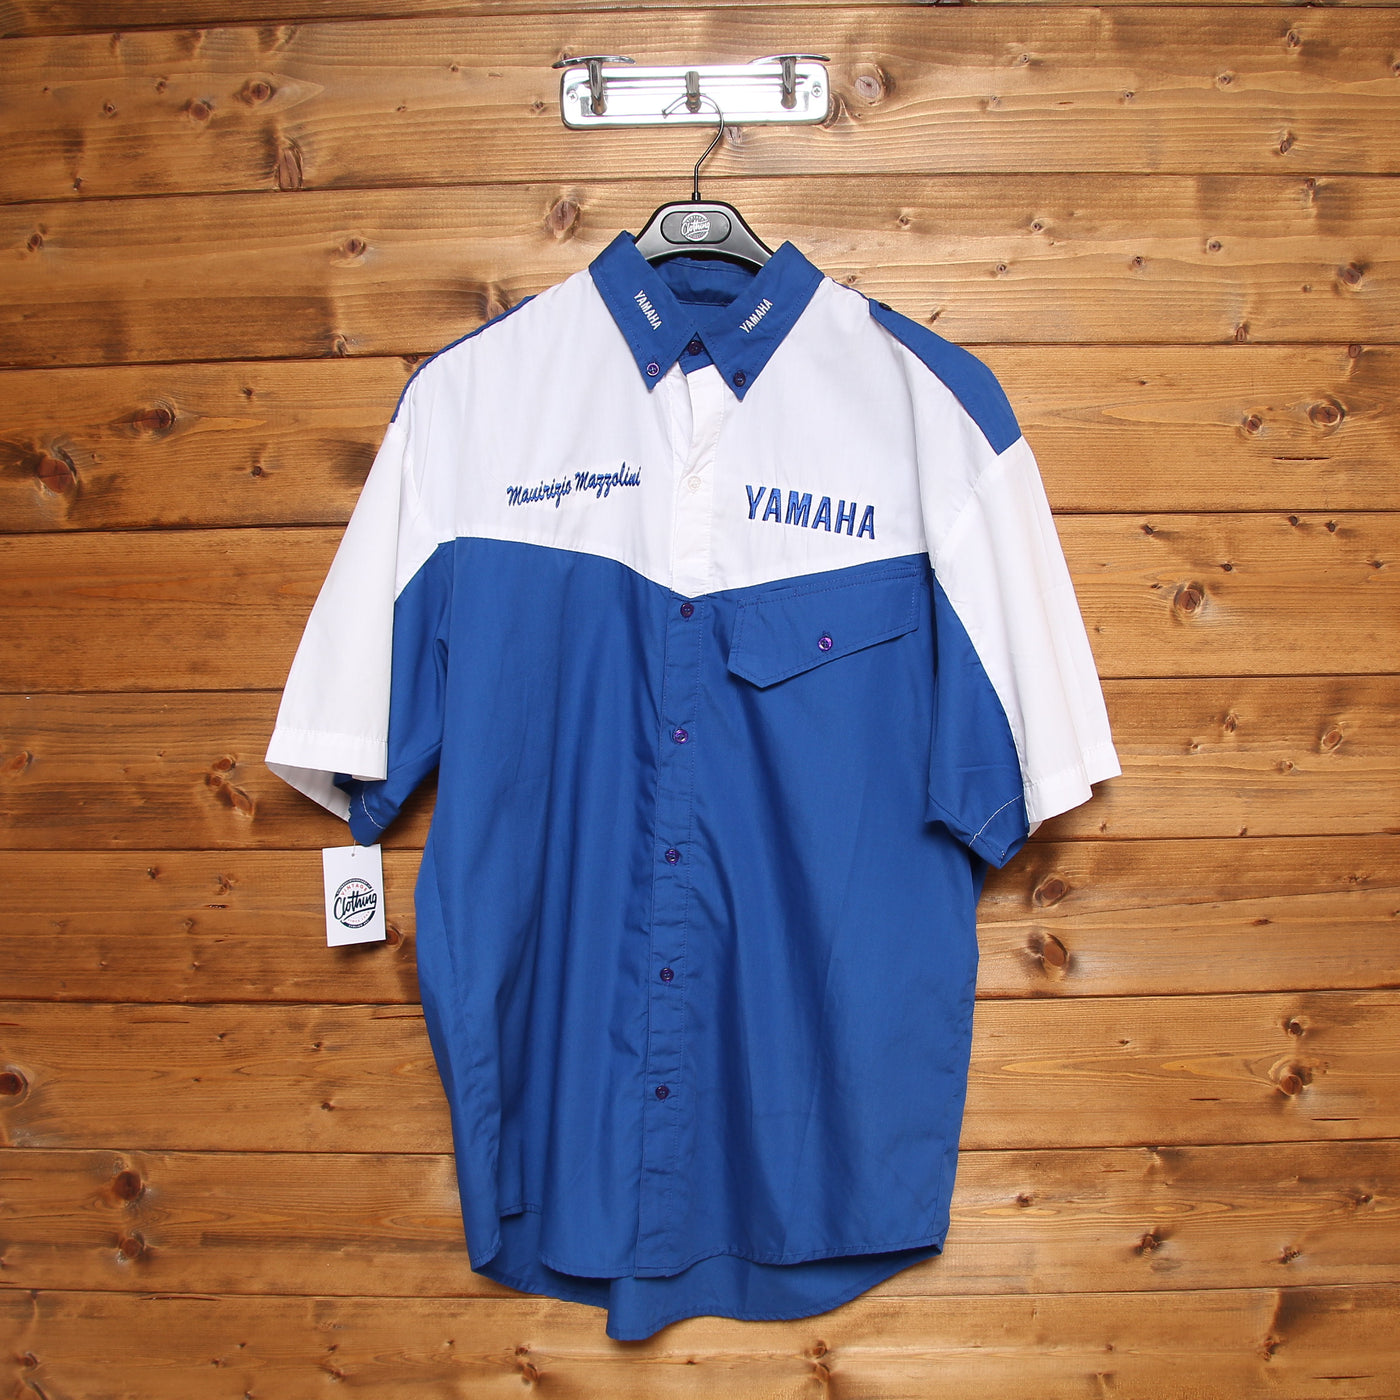 ADM Yamaha Racing Team Camicia Vintage Blu e Bianco Uomo Taglia XL Made in USA